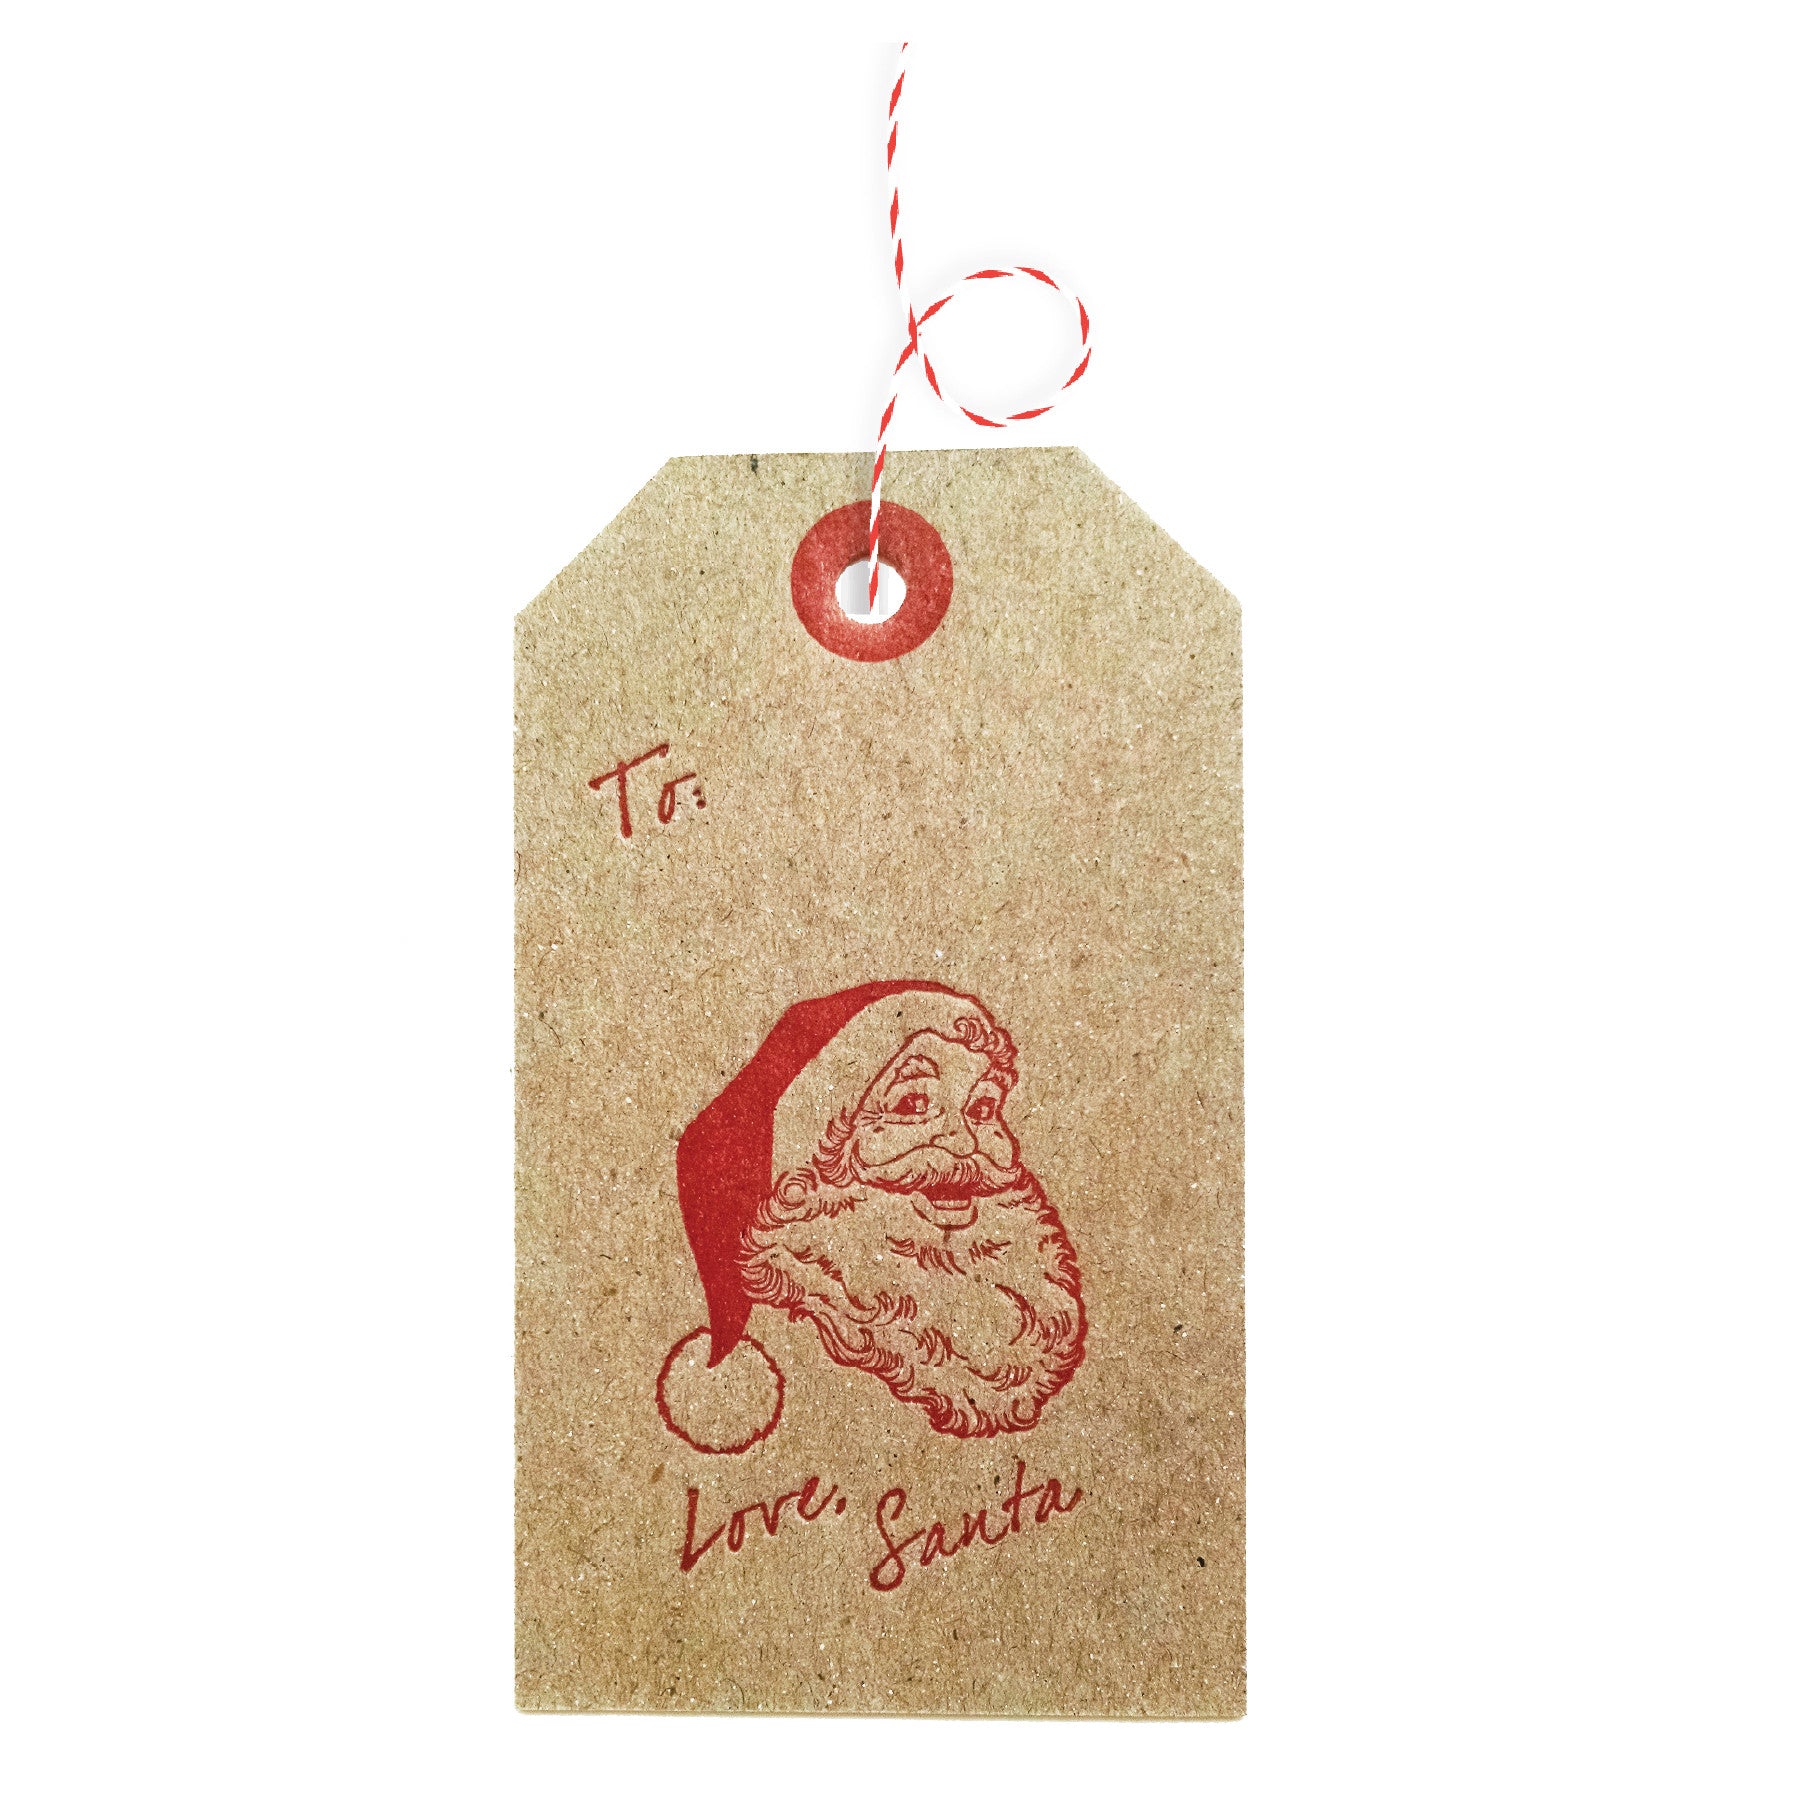 Joy Holiday Gift Tags – El's Cards